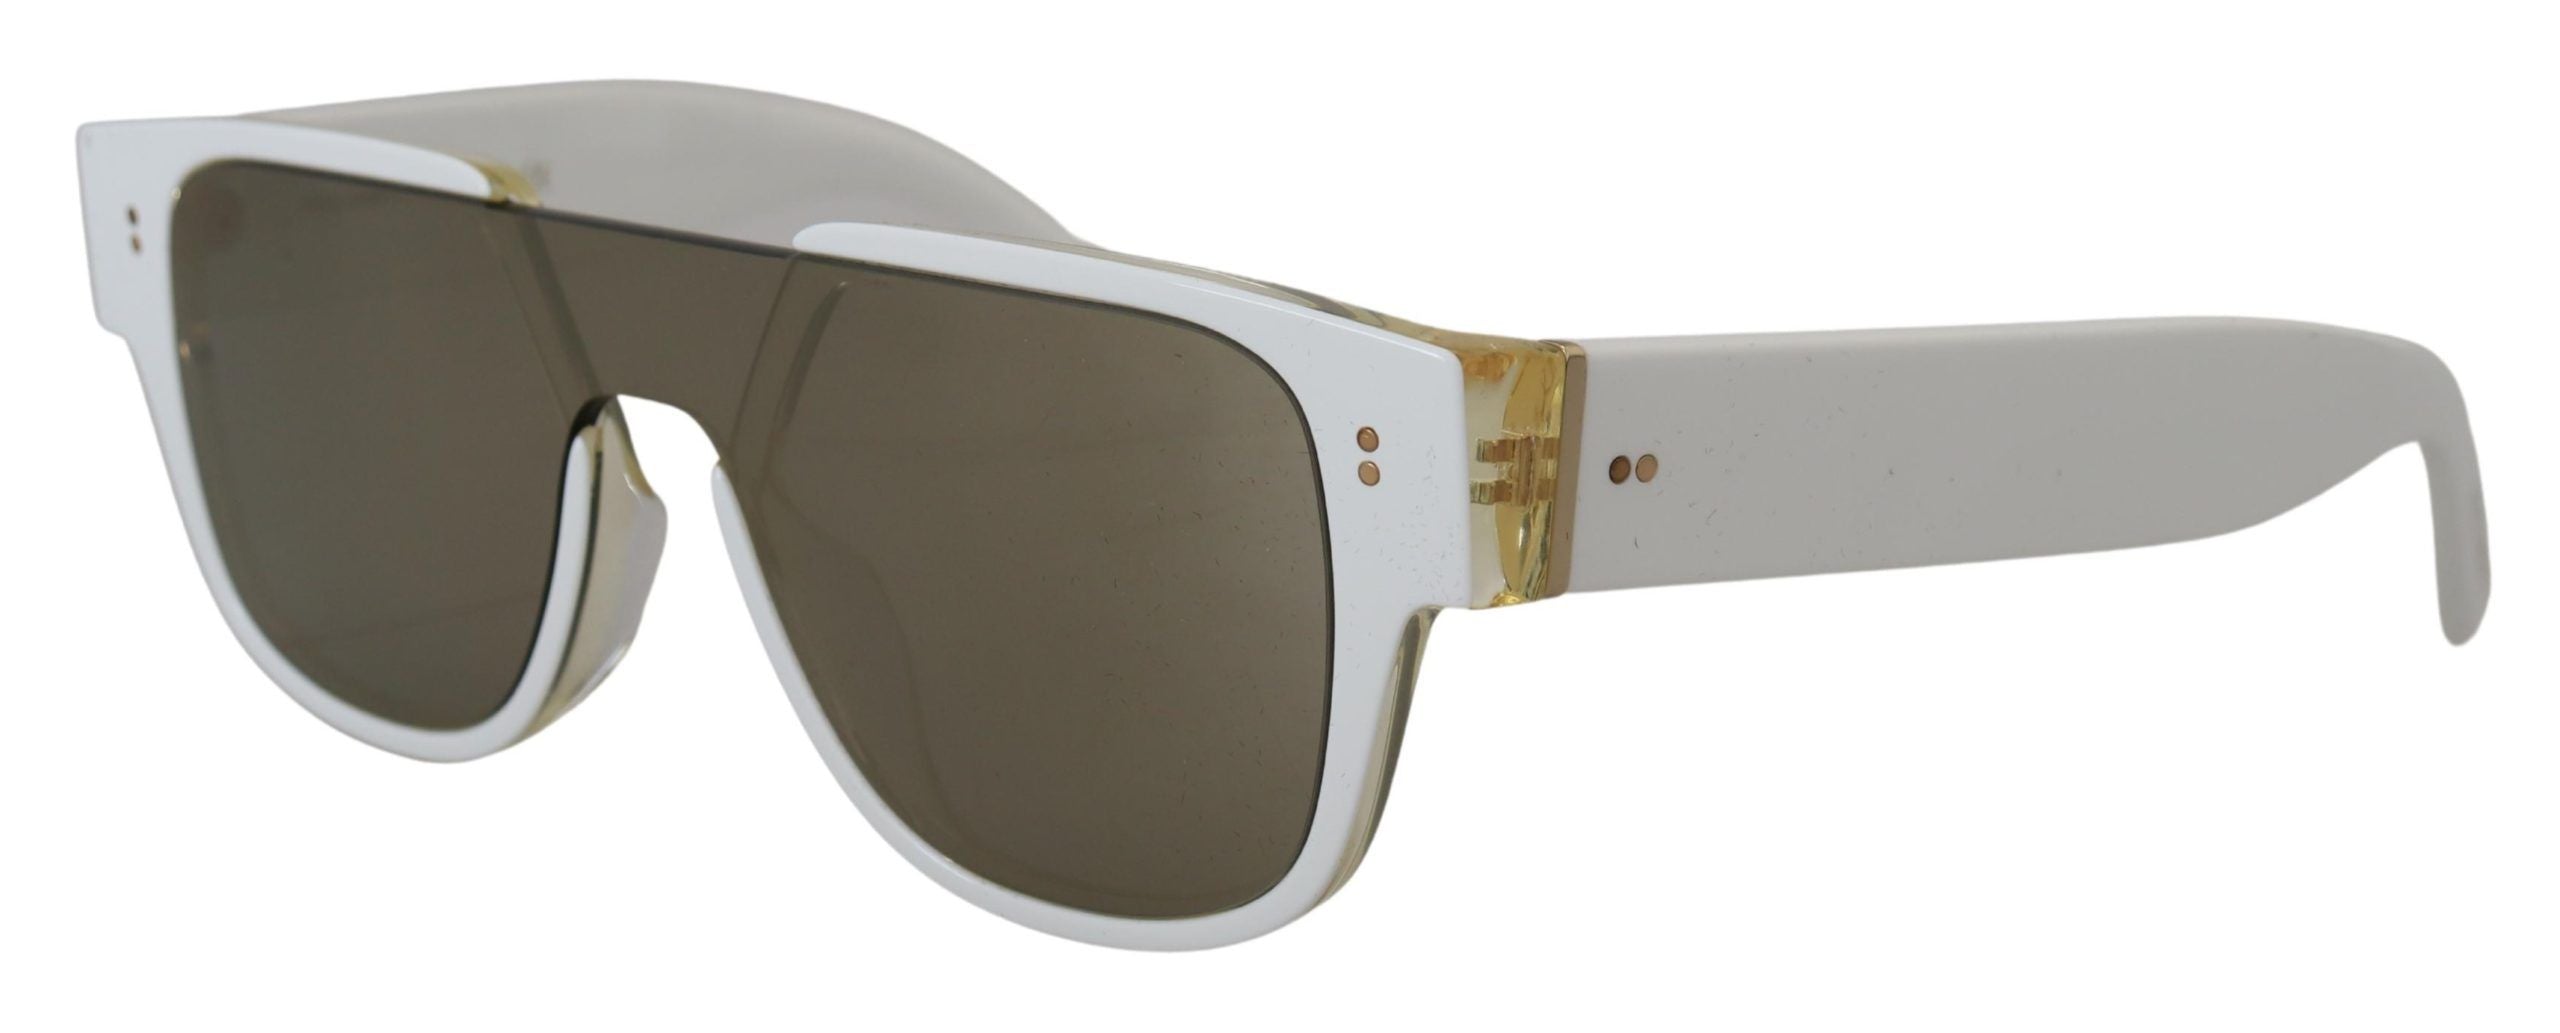 White Acetate Full Rim Frame Shades DG4356F Sunglasses